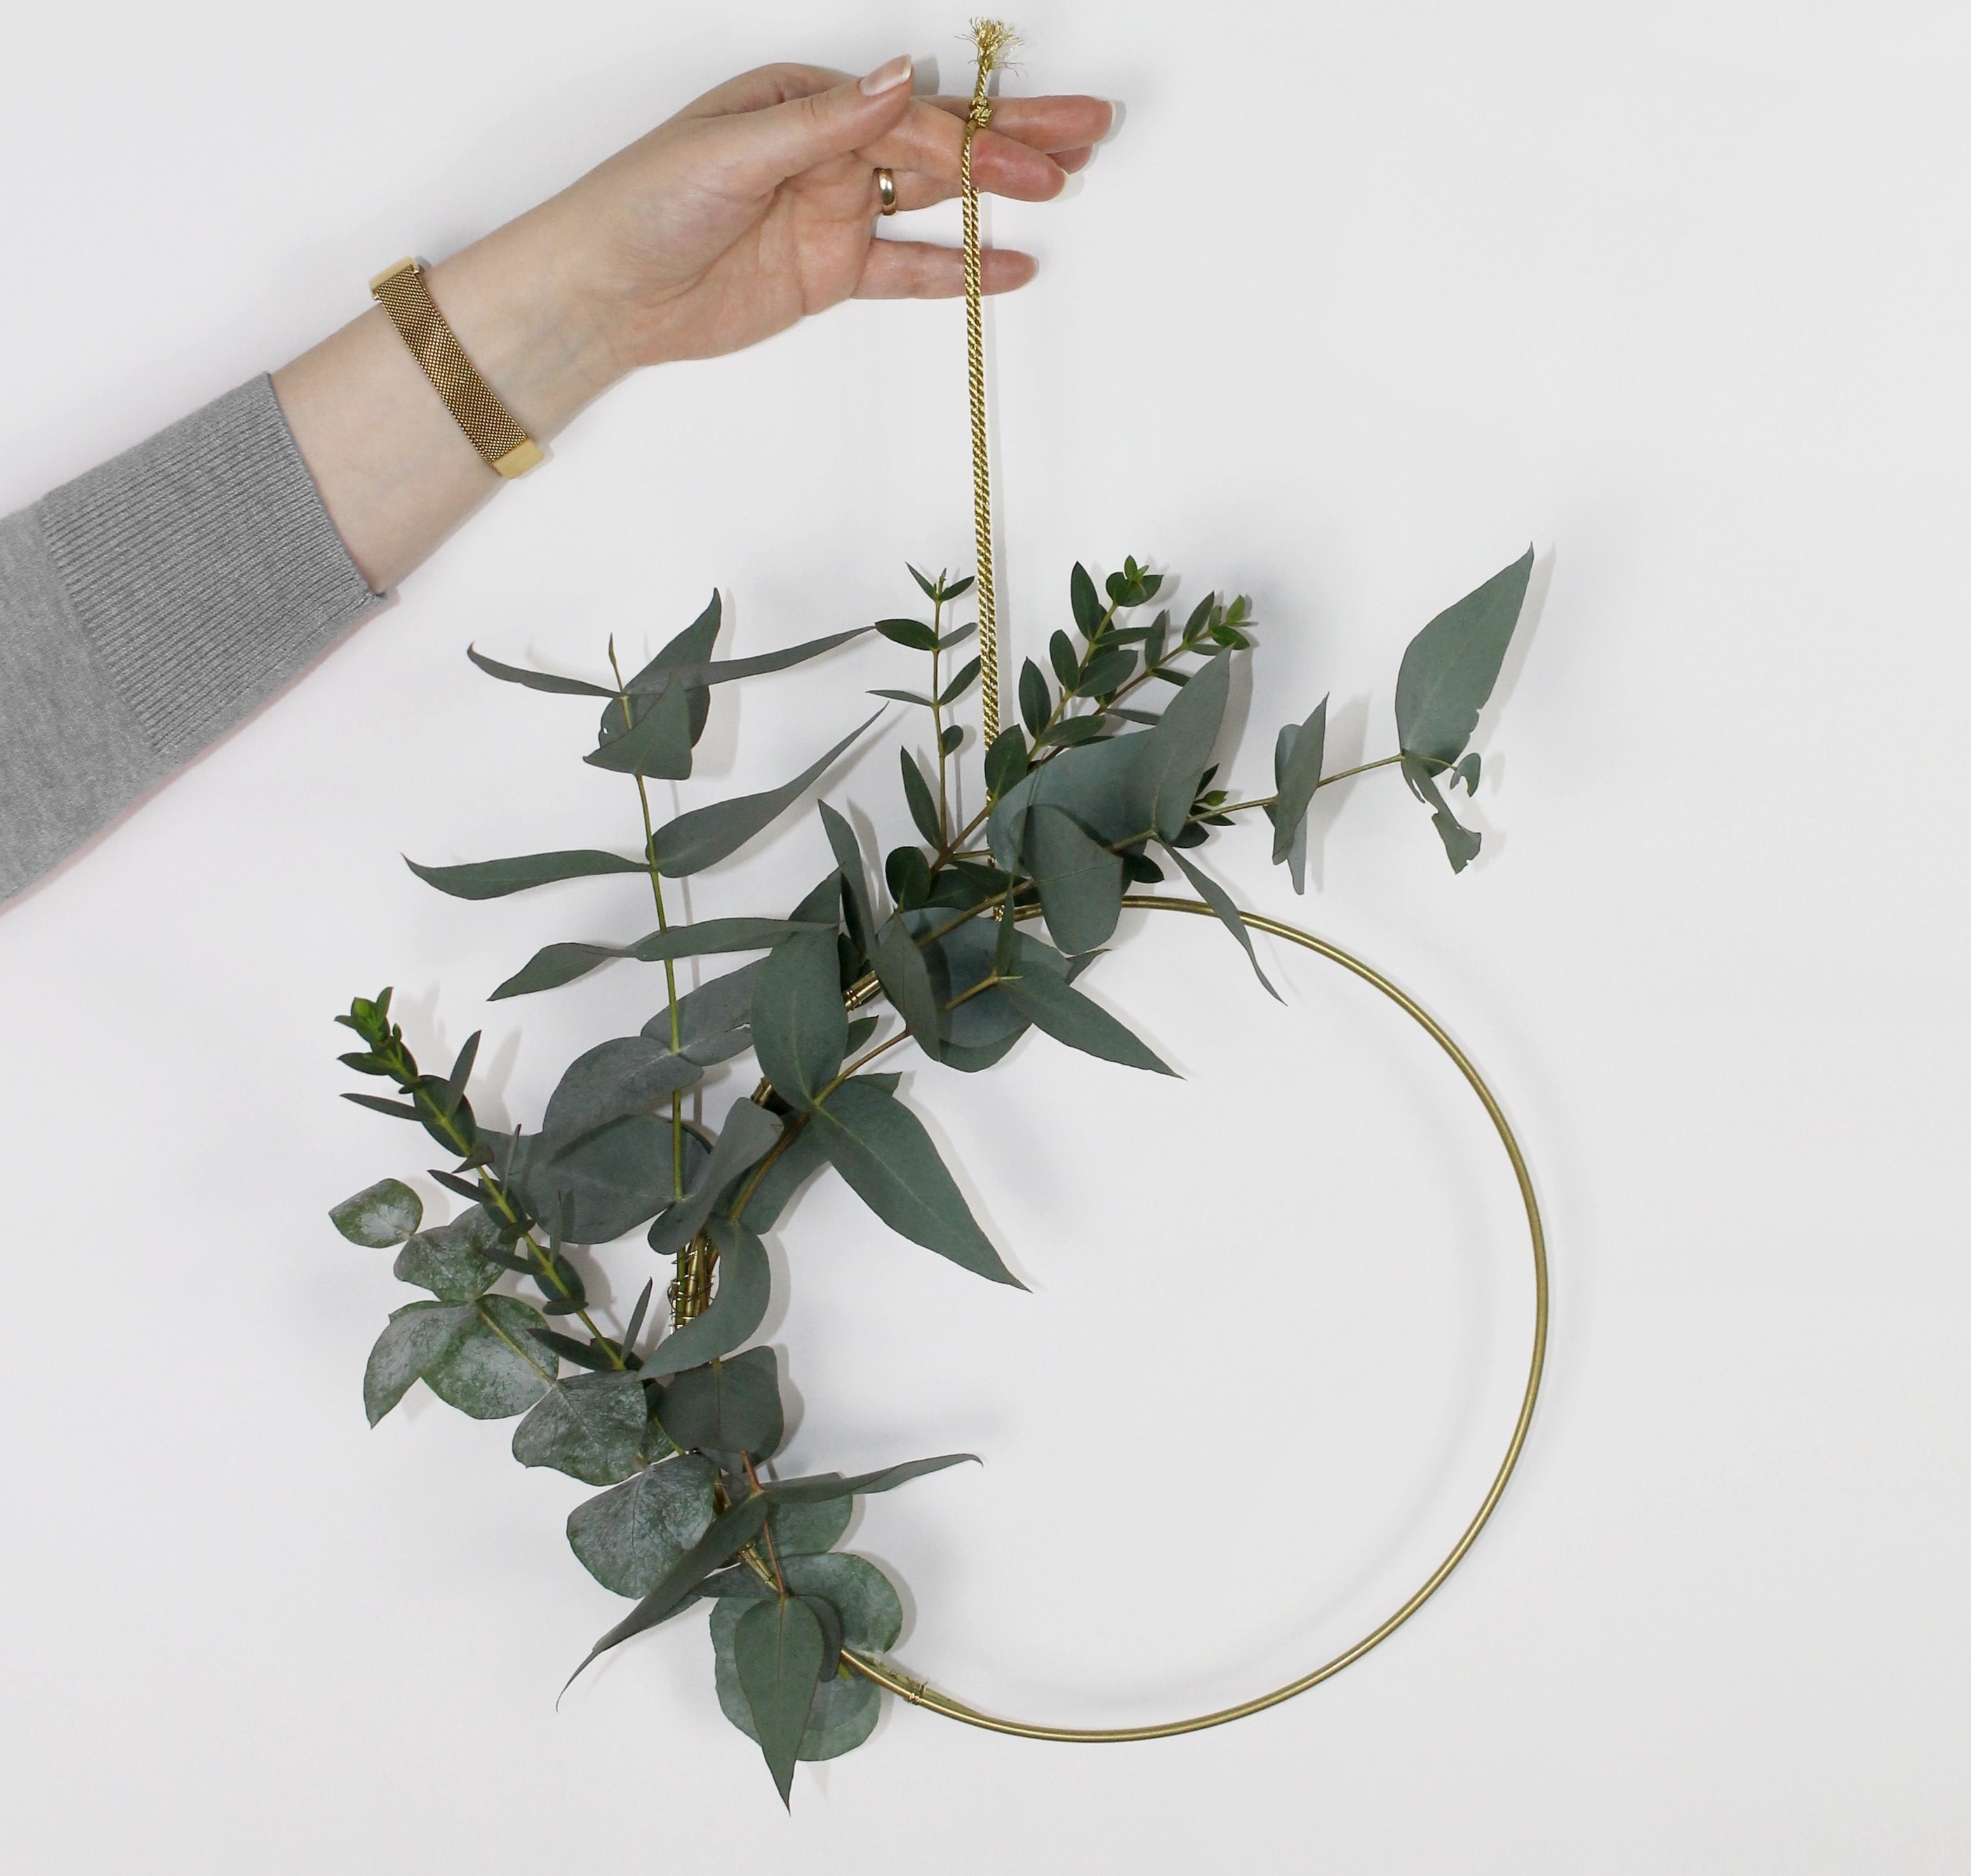 Use some eucalyptus to create a sophisticated Christmas wreath!